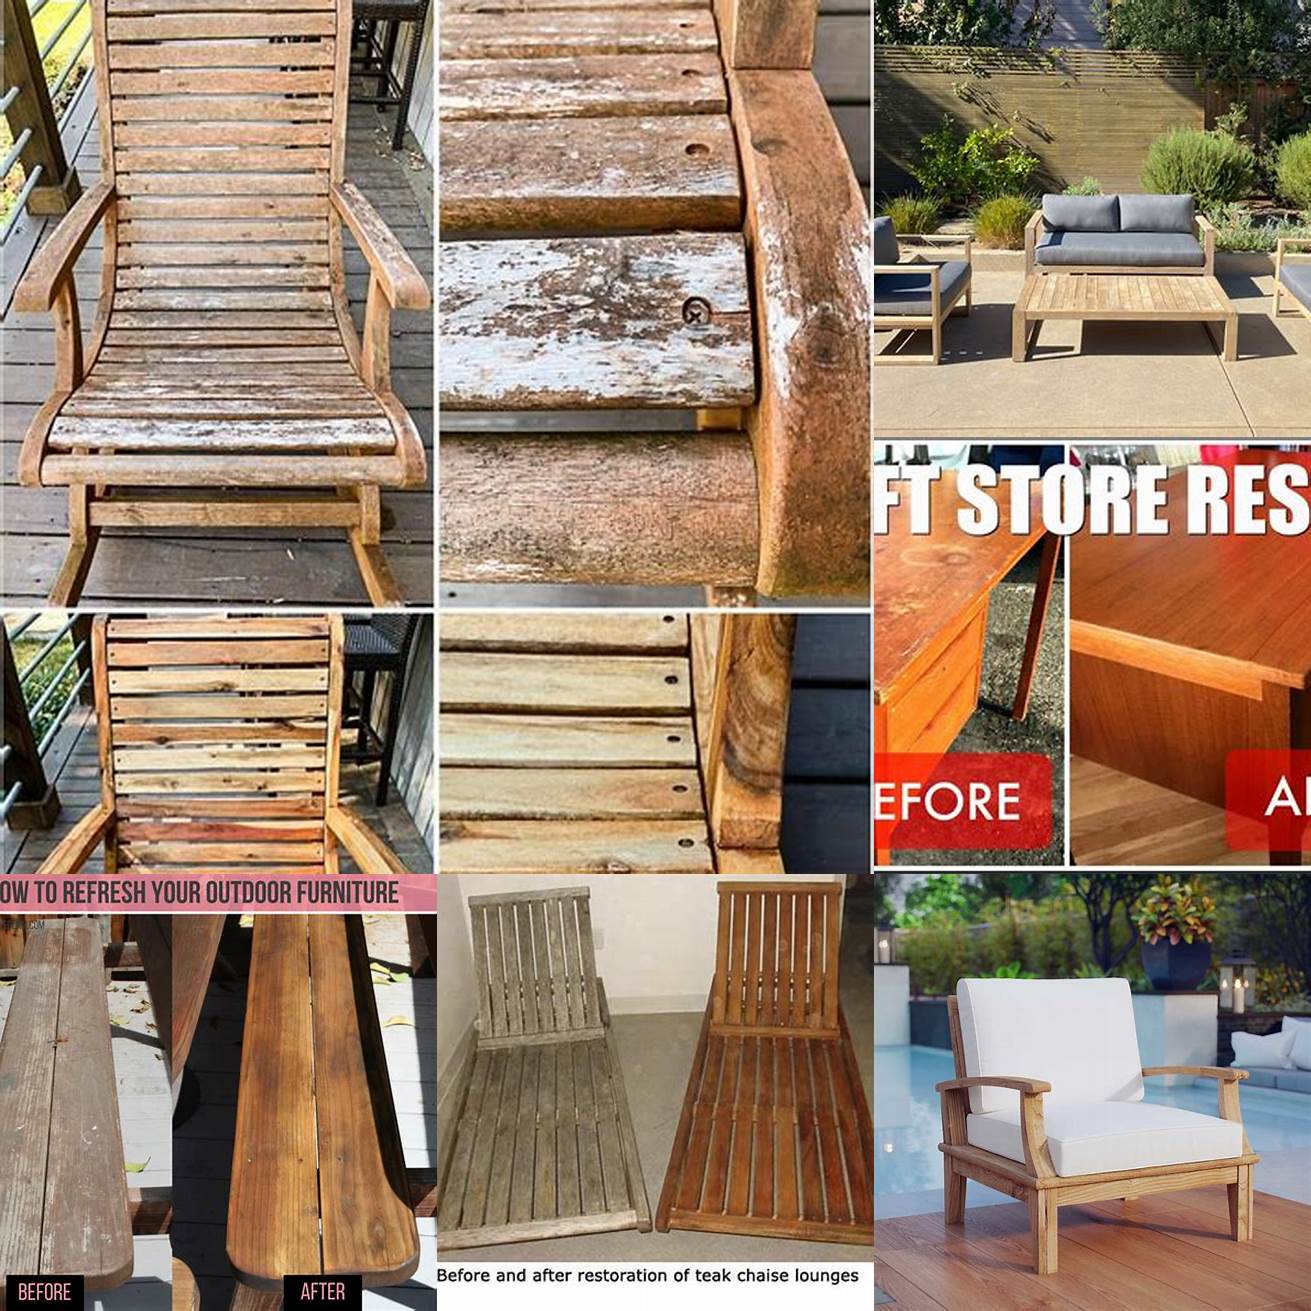 Teak Furniture After a Storm